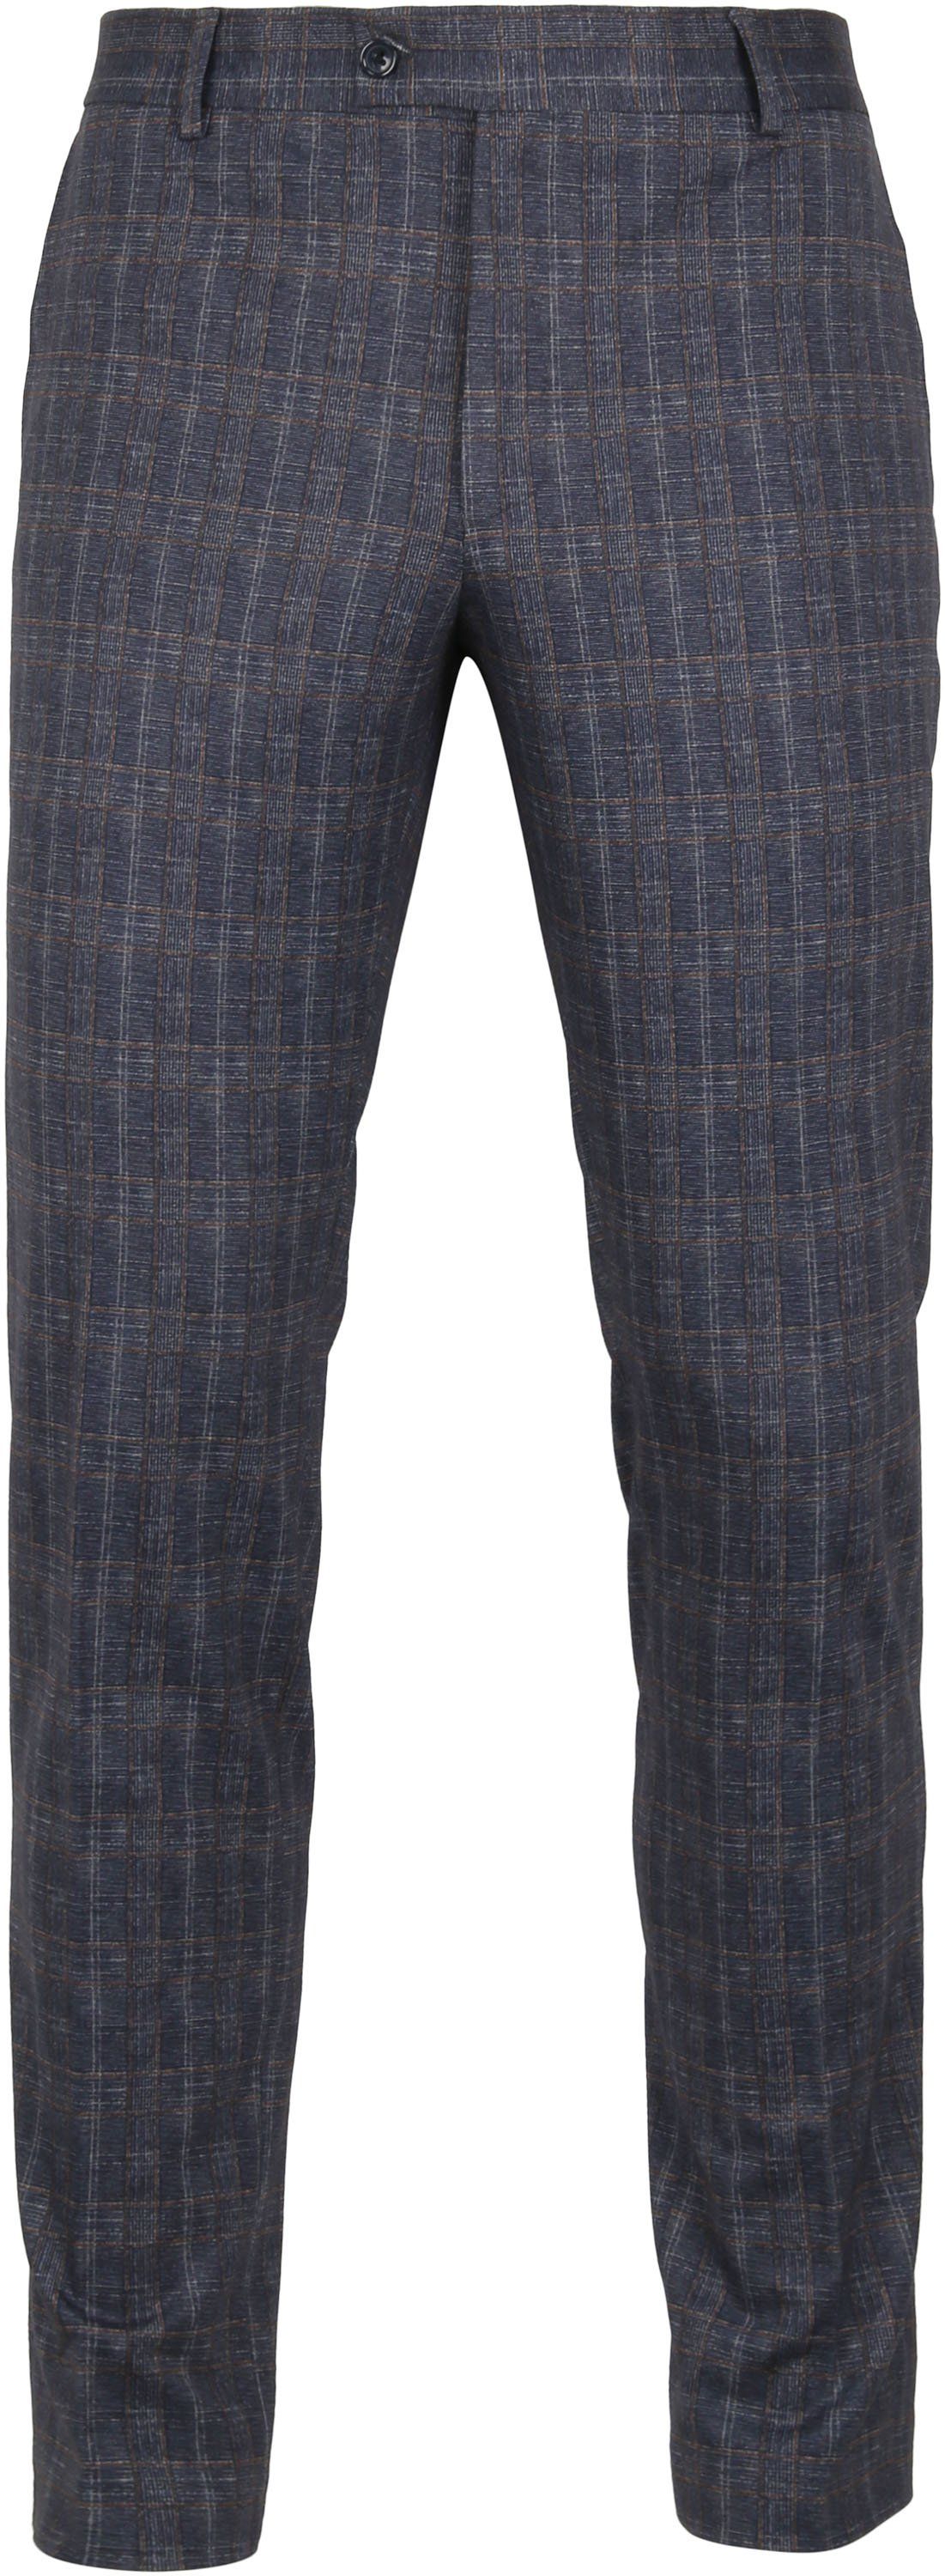 Suitable Pantalon Jersey Check Navy Blue Dark Blue size W 34